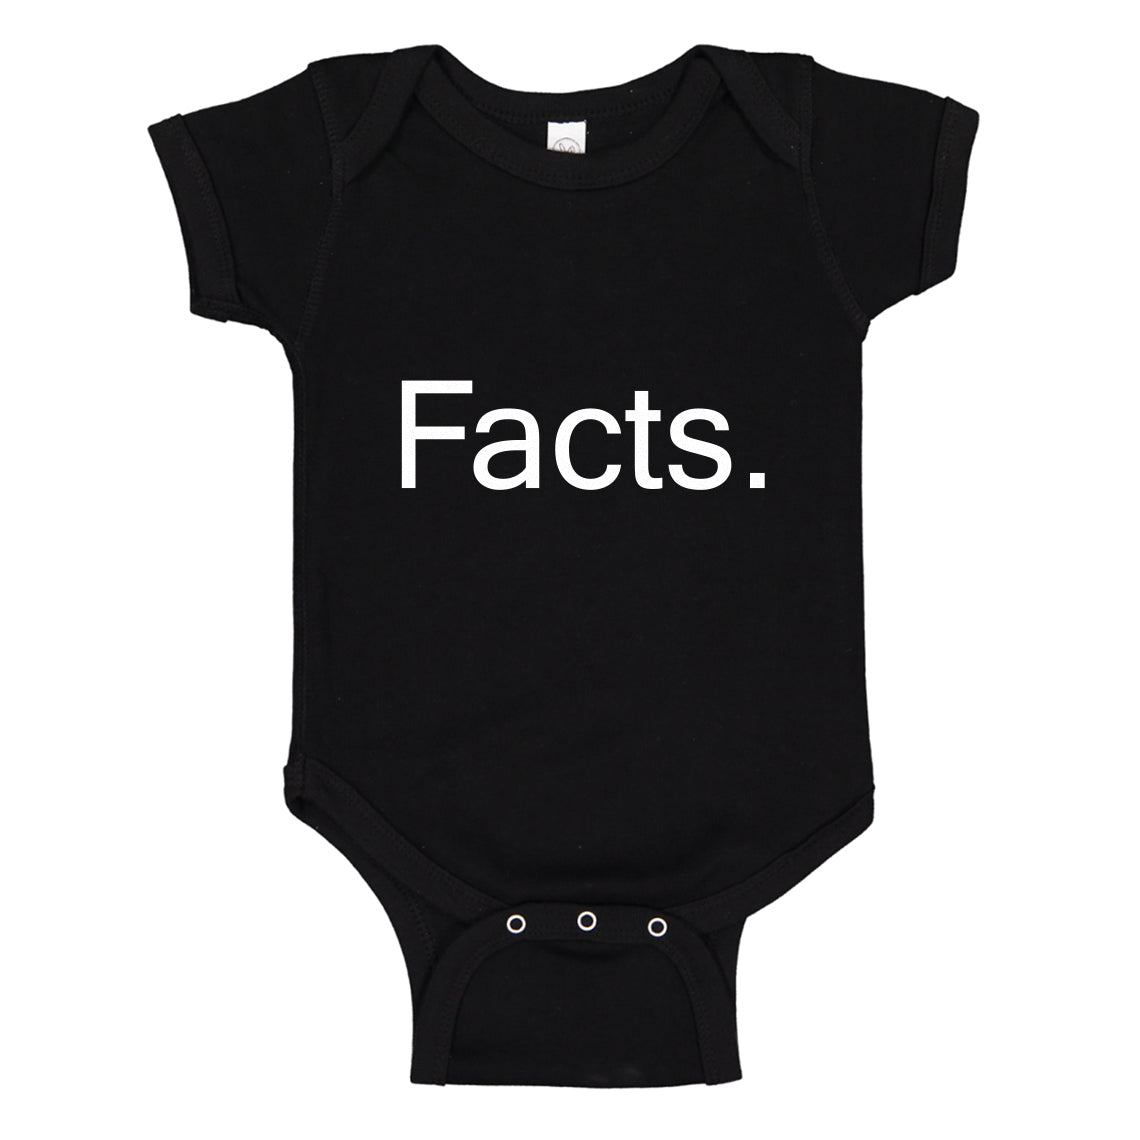 Baby Onesie Facts. 100% Cotton Infant Bodysuit